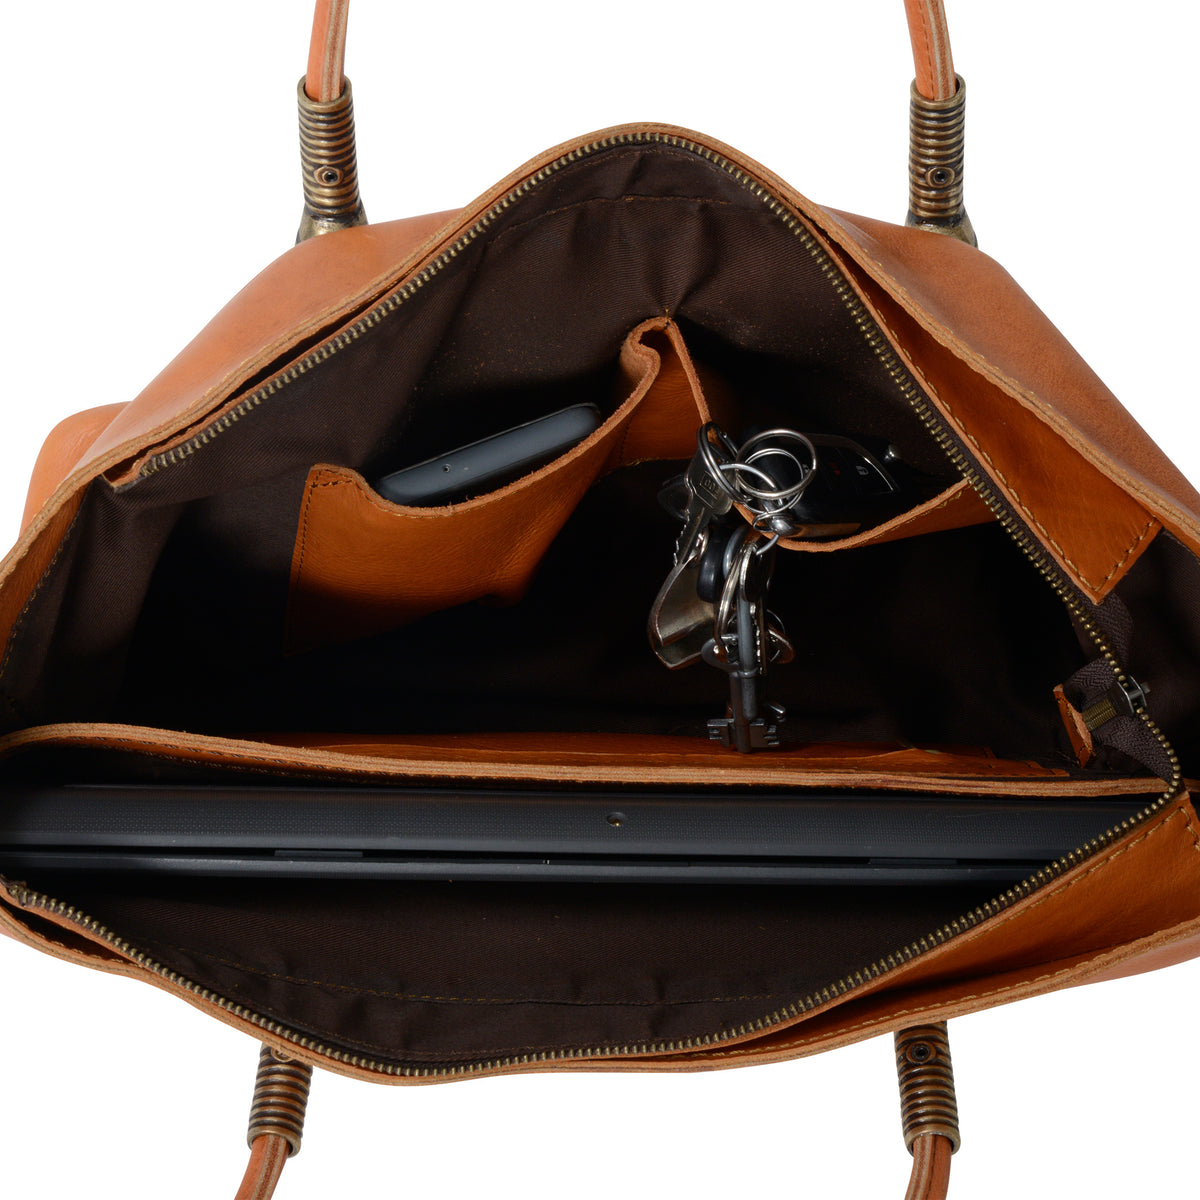 Leather Large Business Handbag